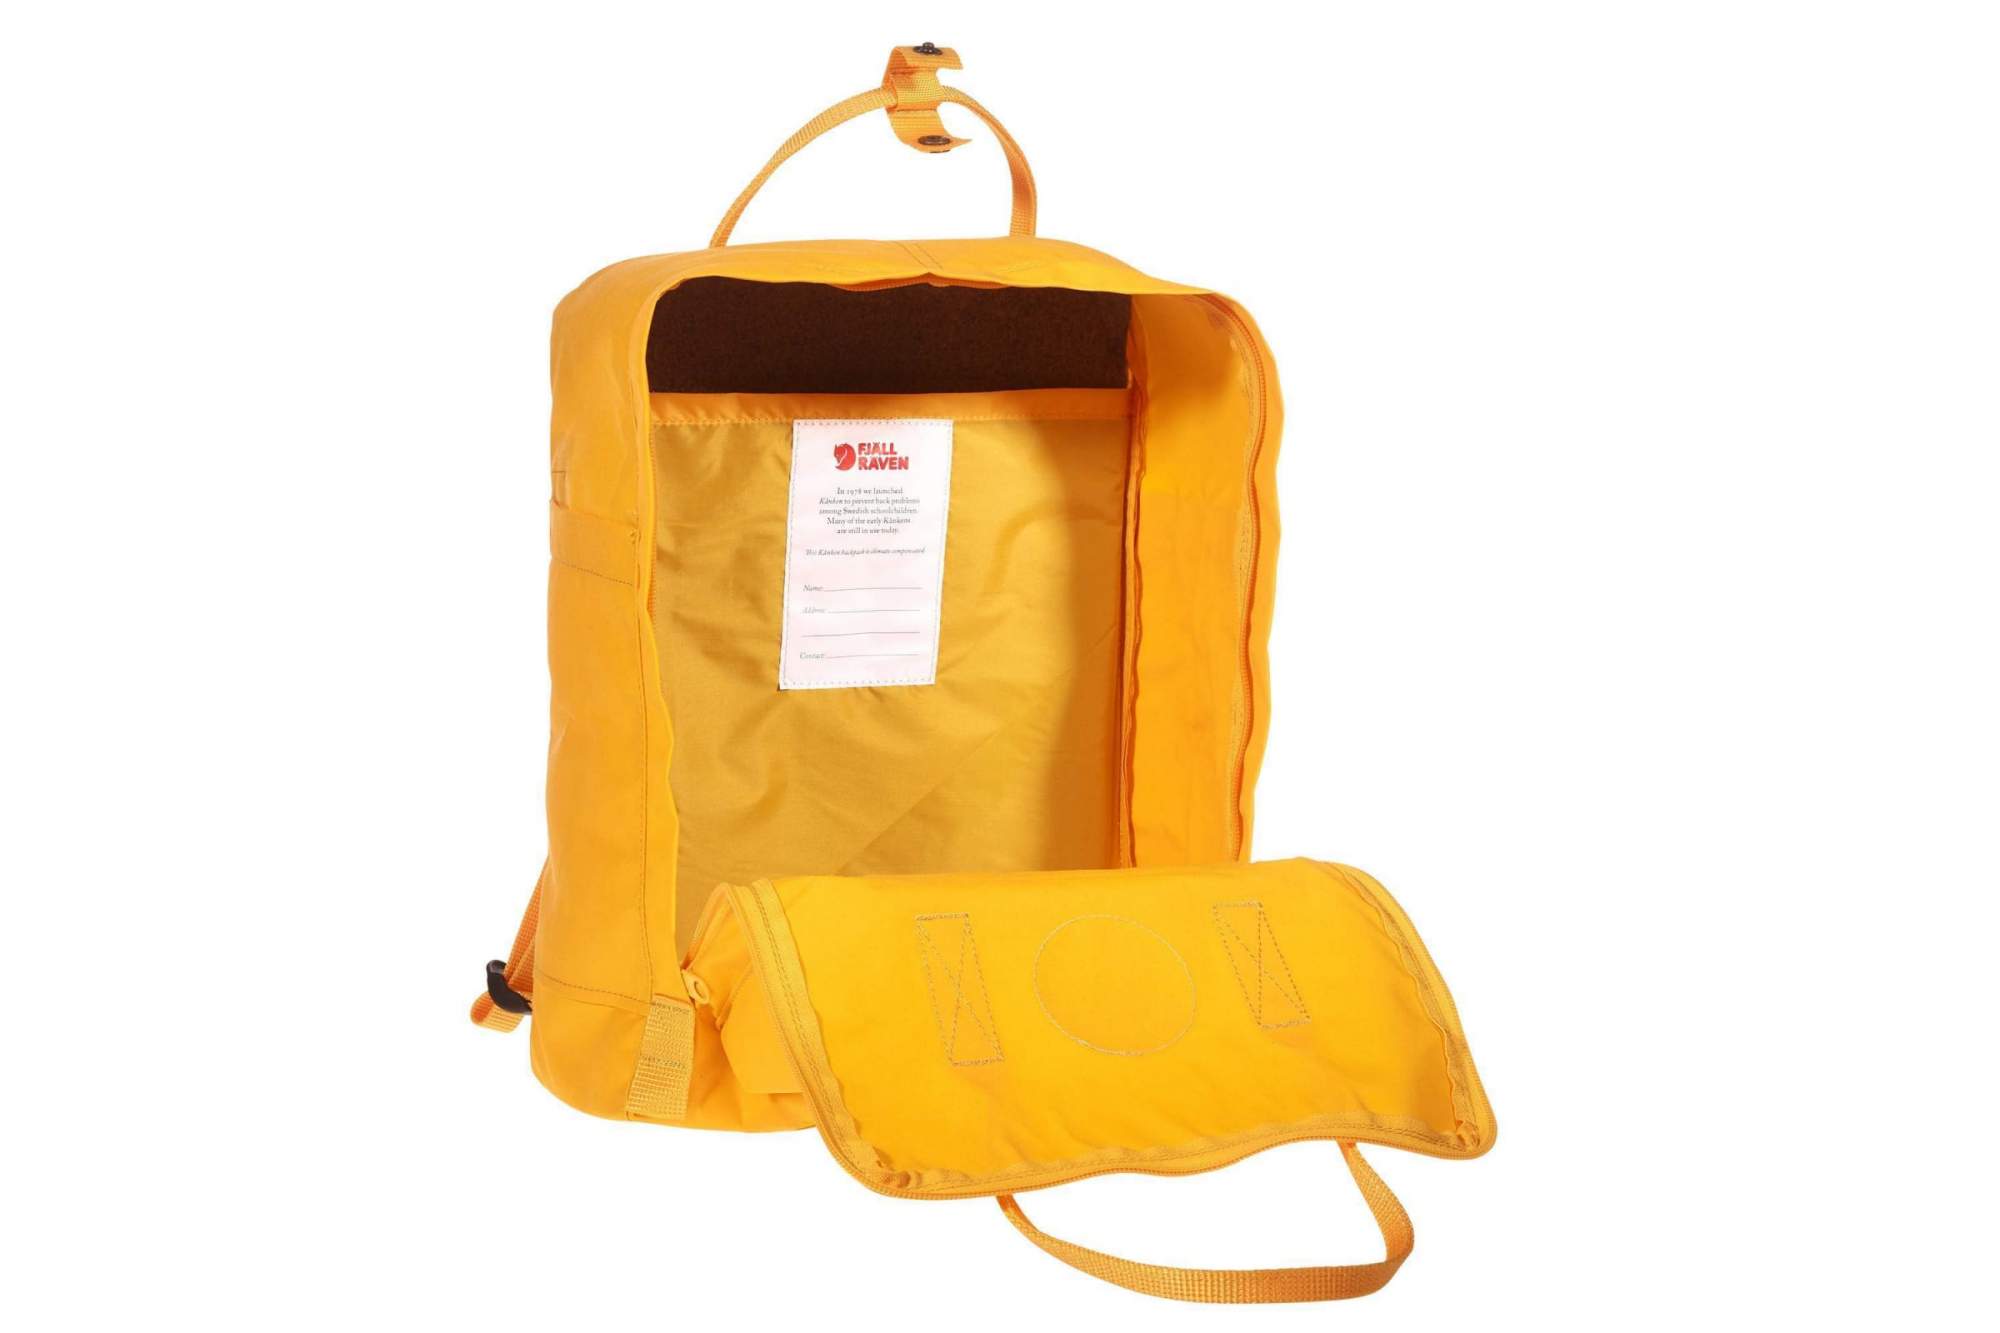 Рюкзак Fjallraven Kanken 141, цвет: желтый, 16 л